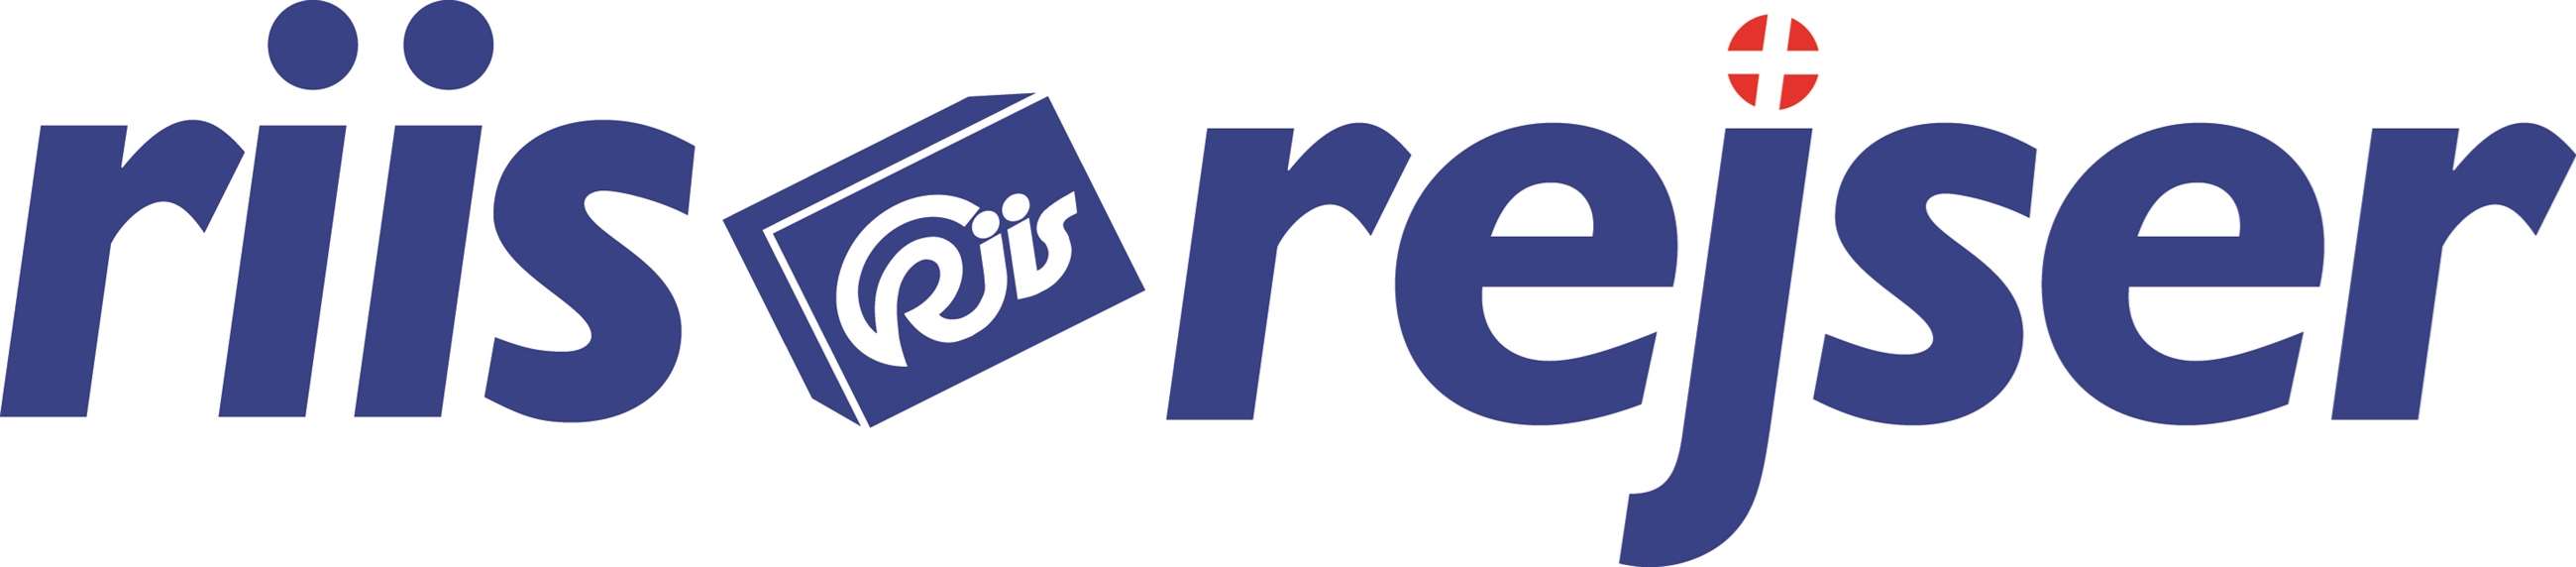 riis logo stor